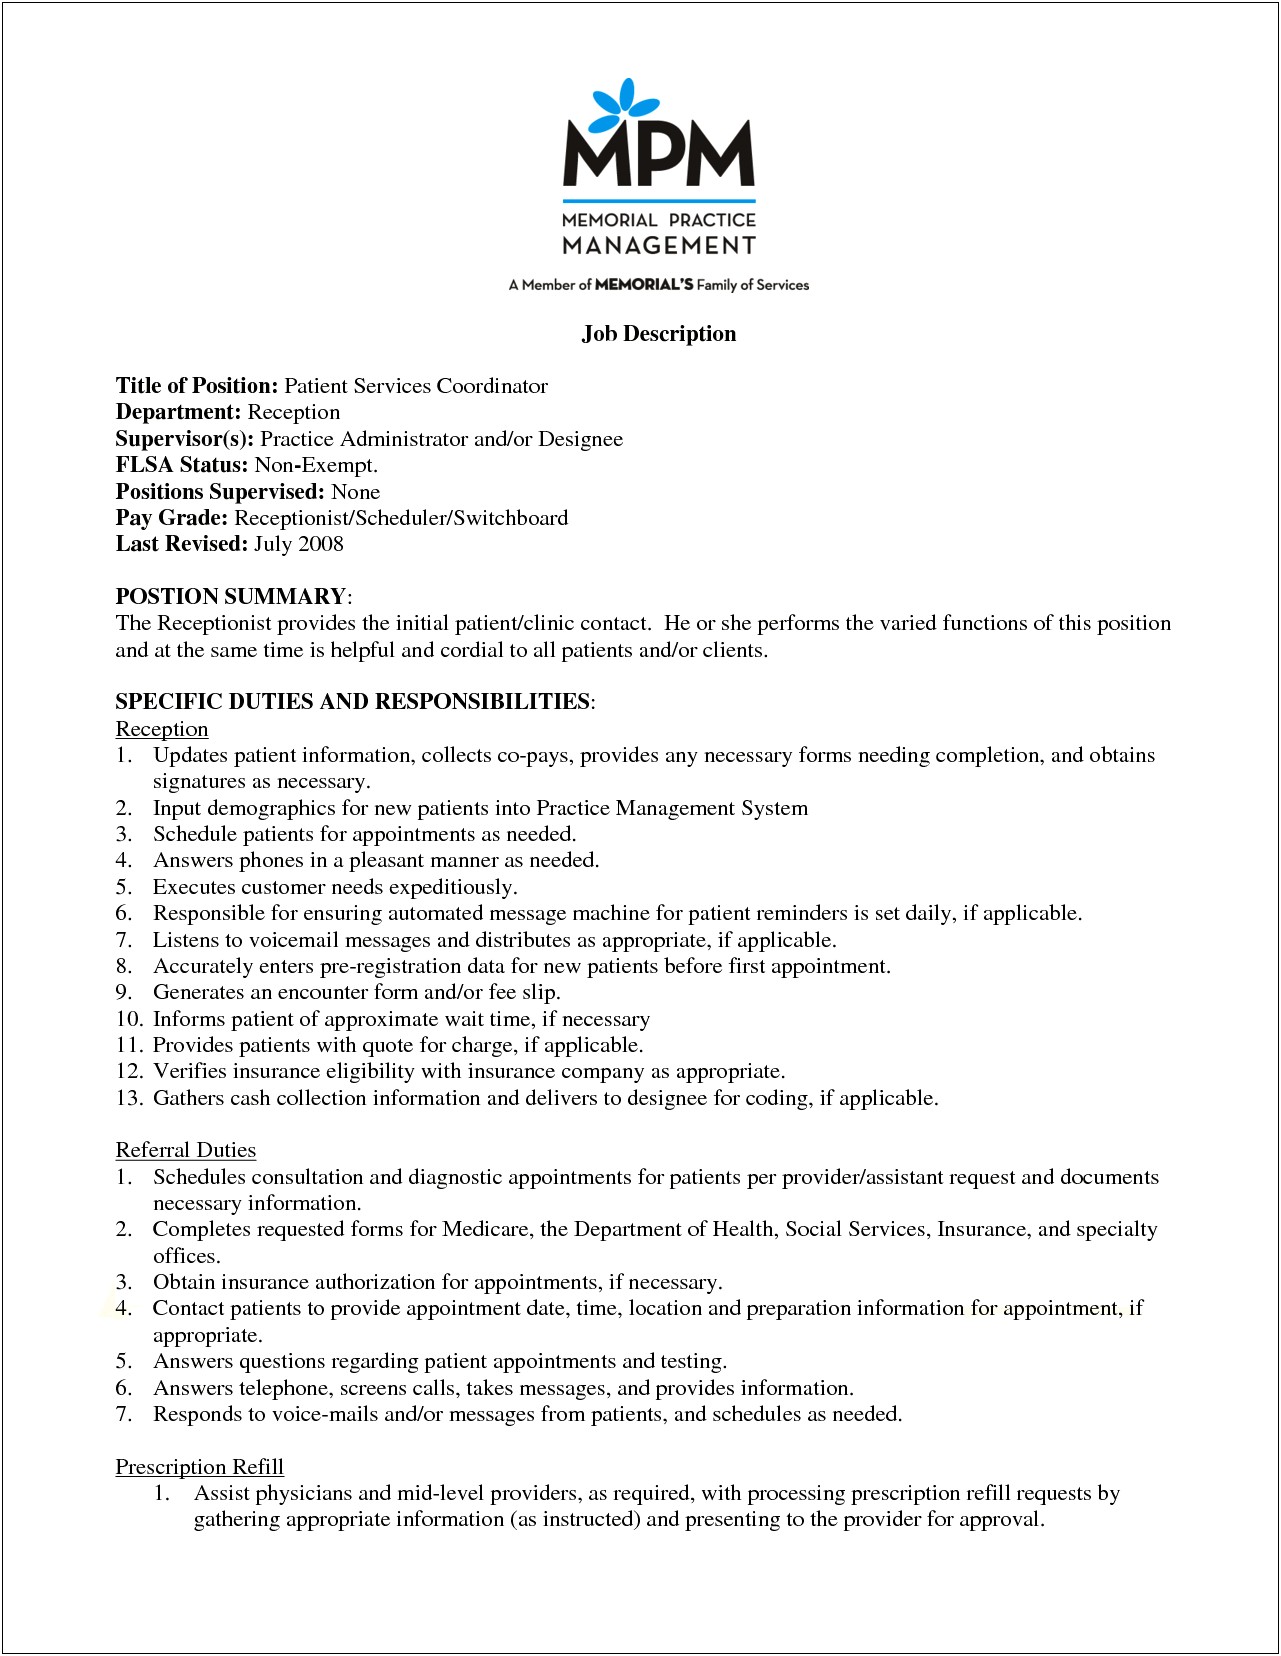 Sample Resume For Medical Care Coordinator